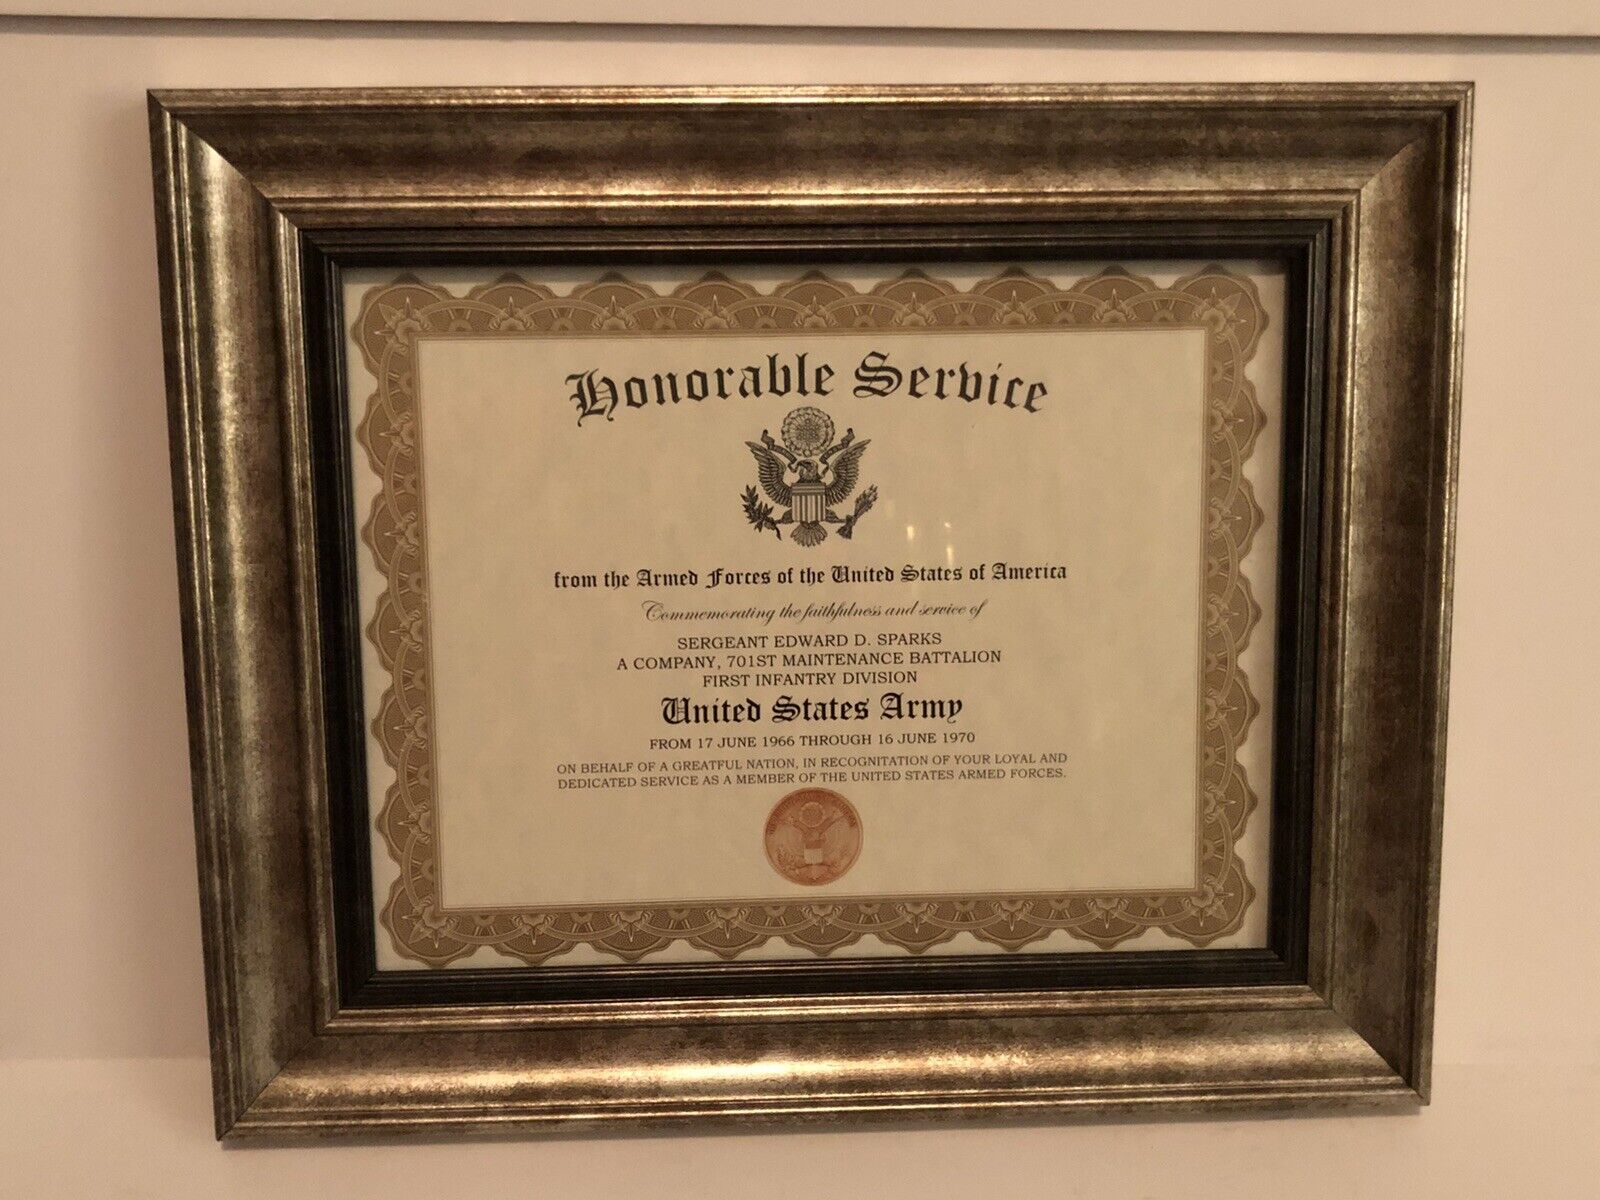 HONORABLE SERVICE ~ U.S. ARMY Commemorative Certificate w/Free Custom Printing